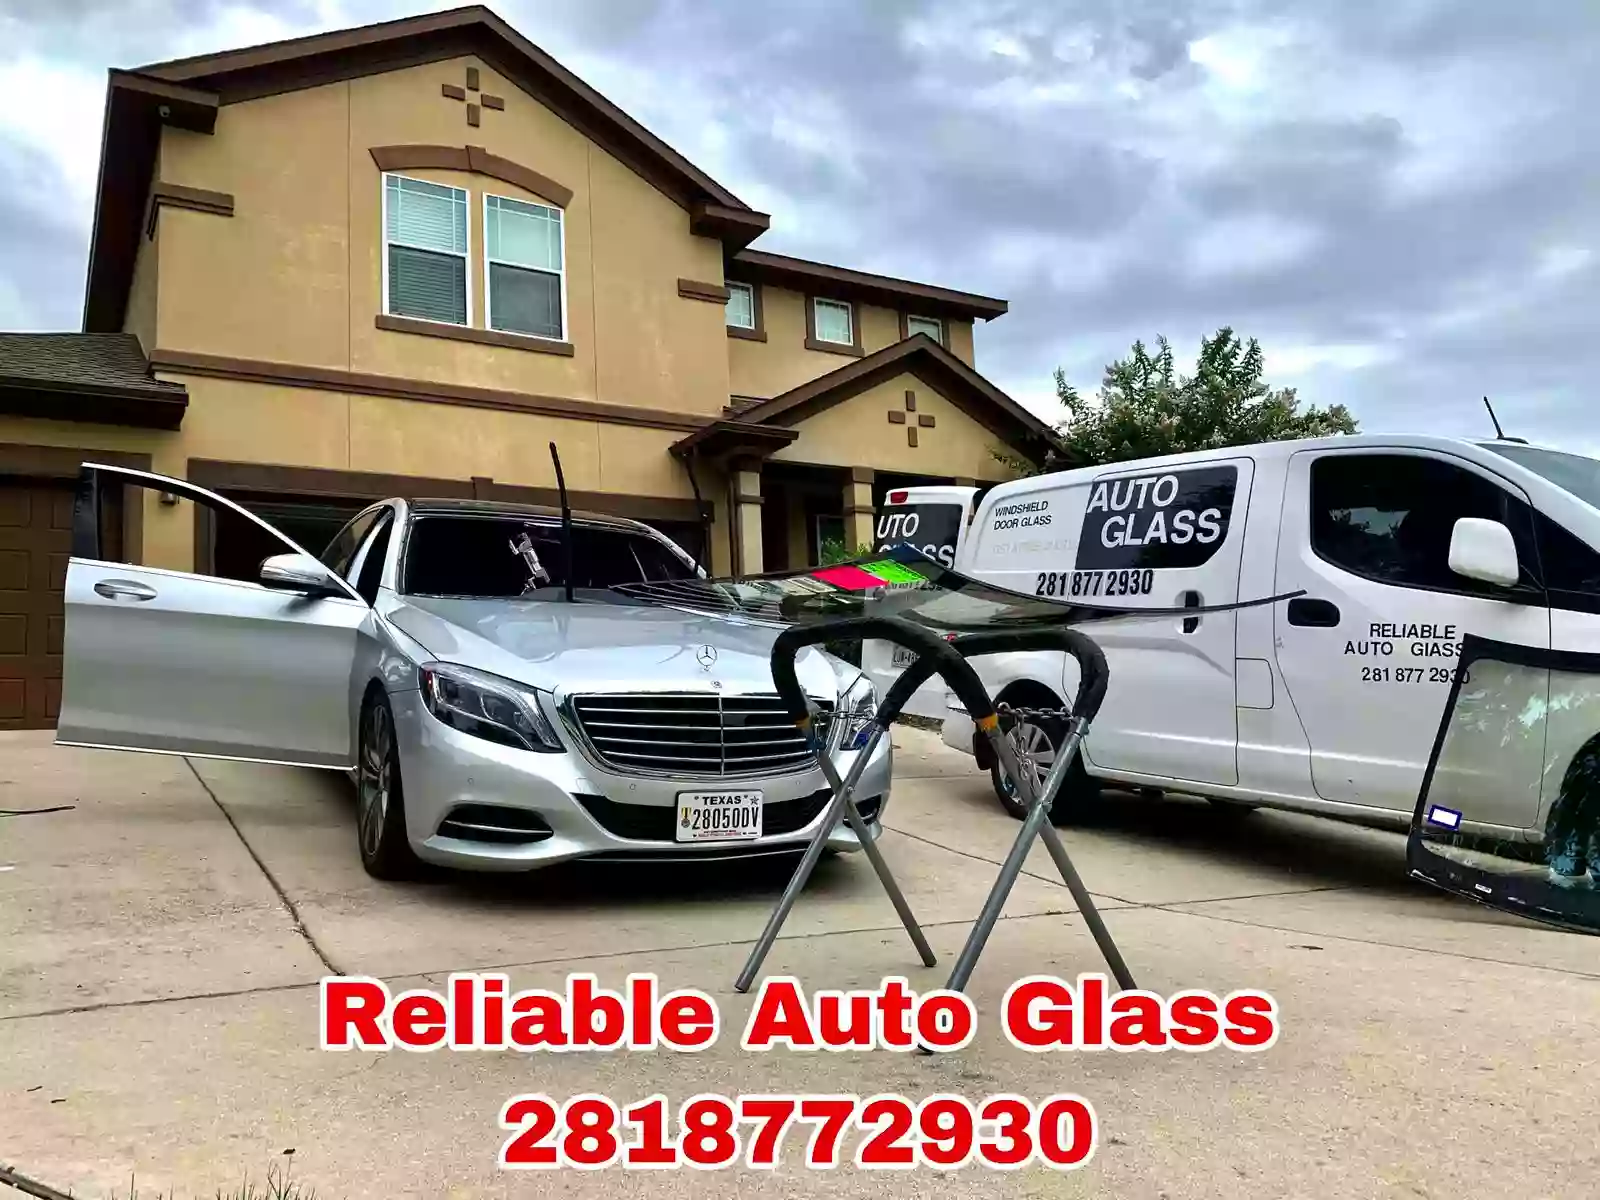 Texas Reliable Auto Glass